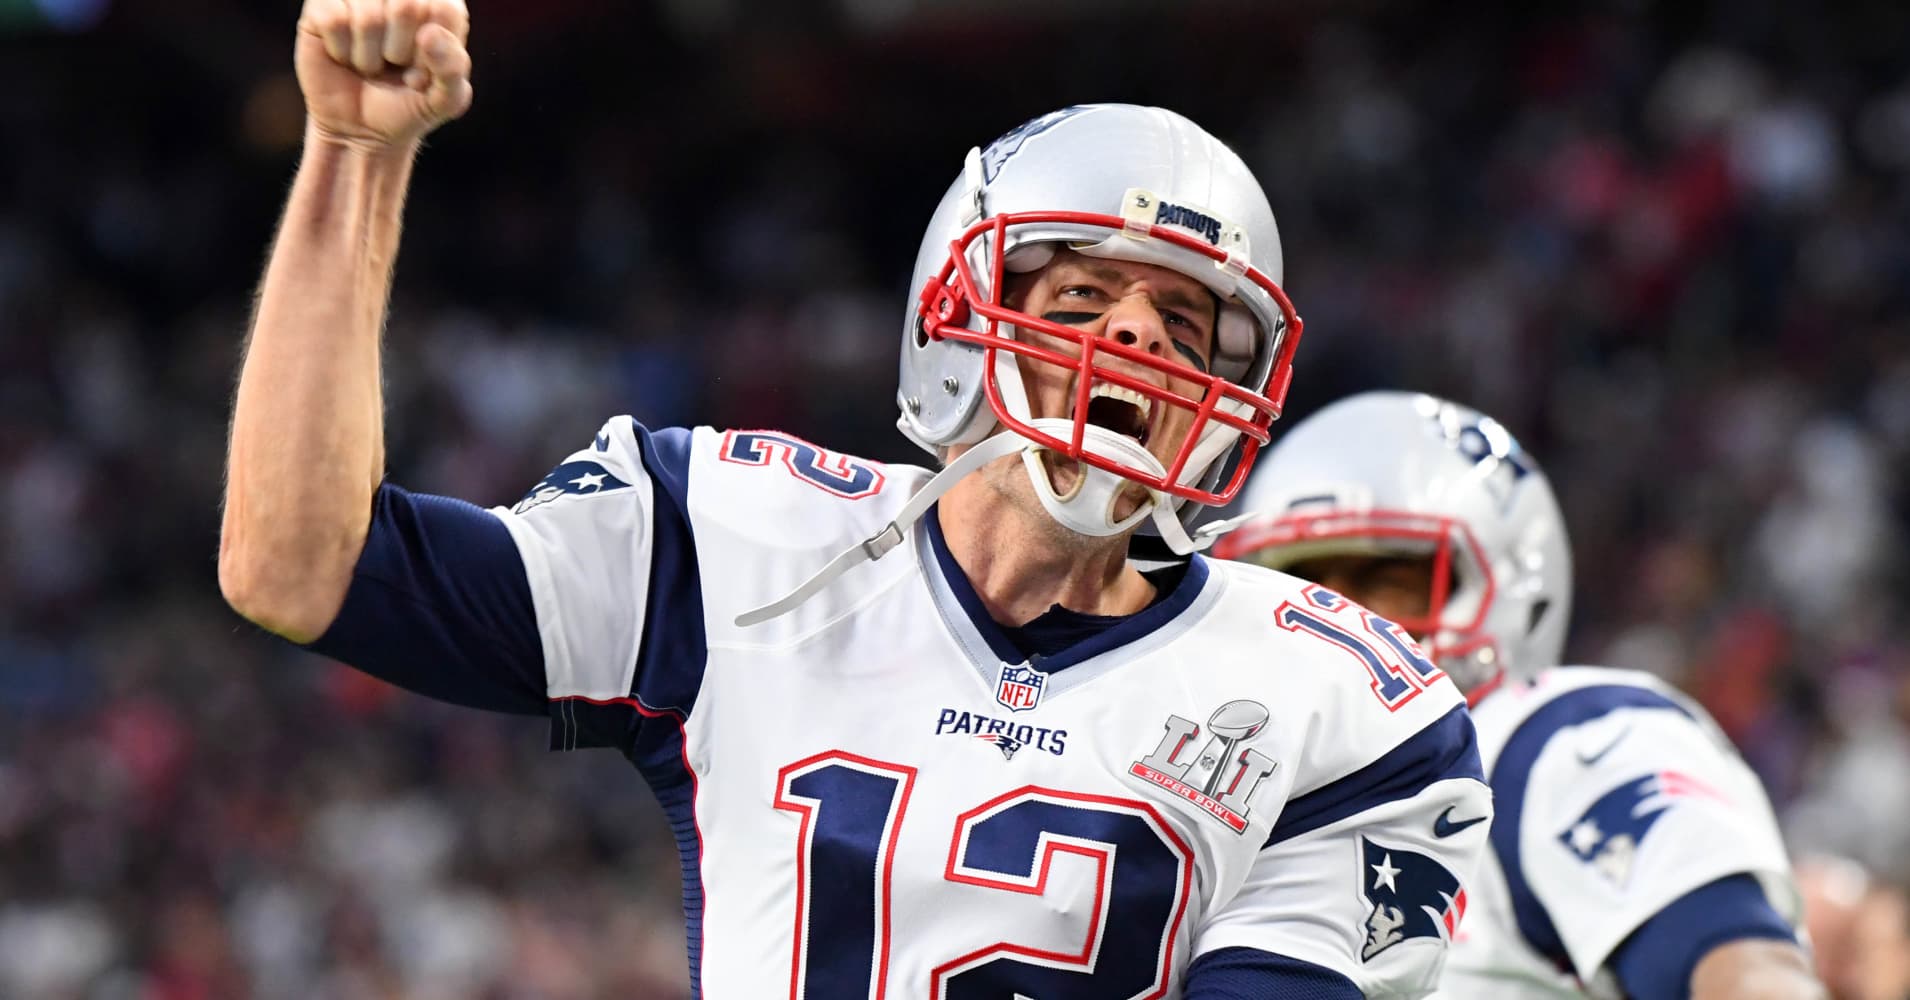 Tom Brady's stolen Super Bowl jersey has been found, NFL says